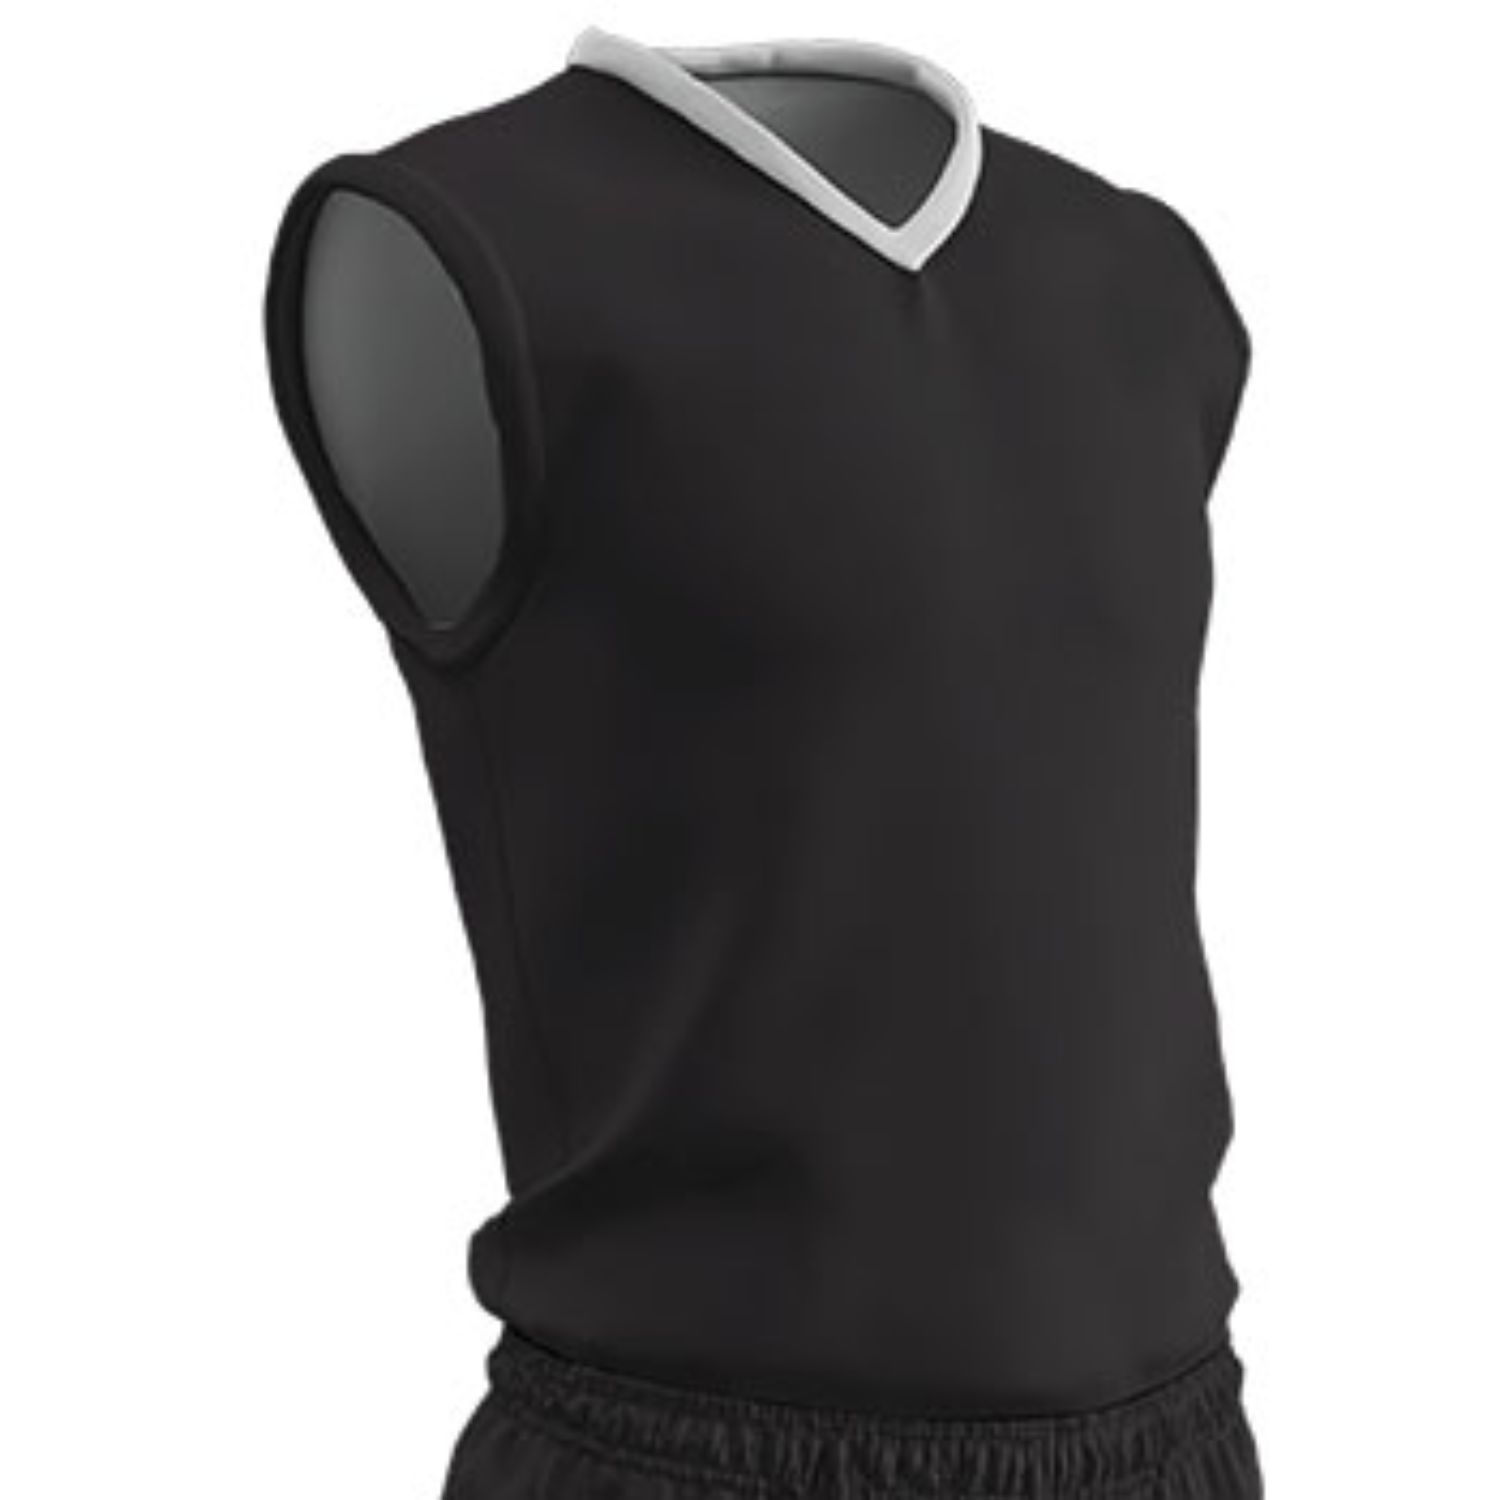 Champro Youth Clutch Basketball Jersey Black White Large